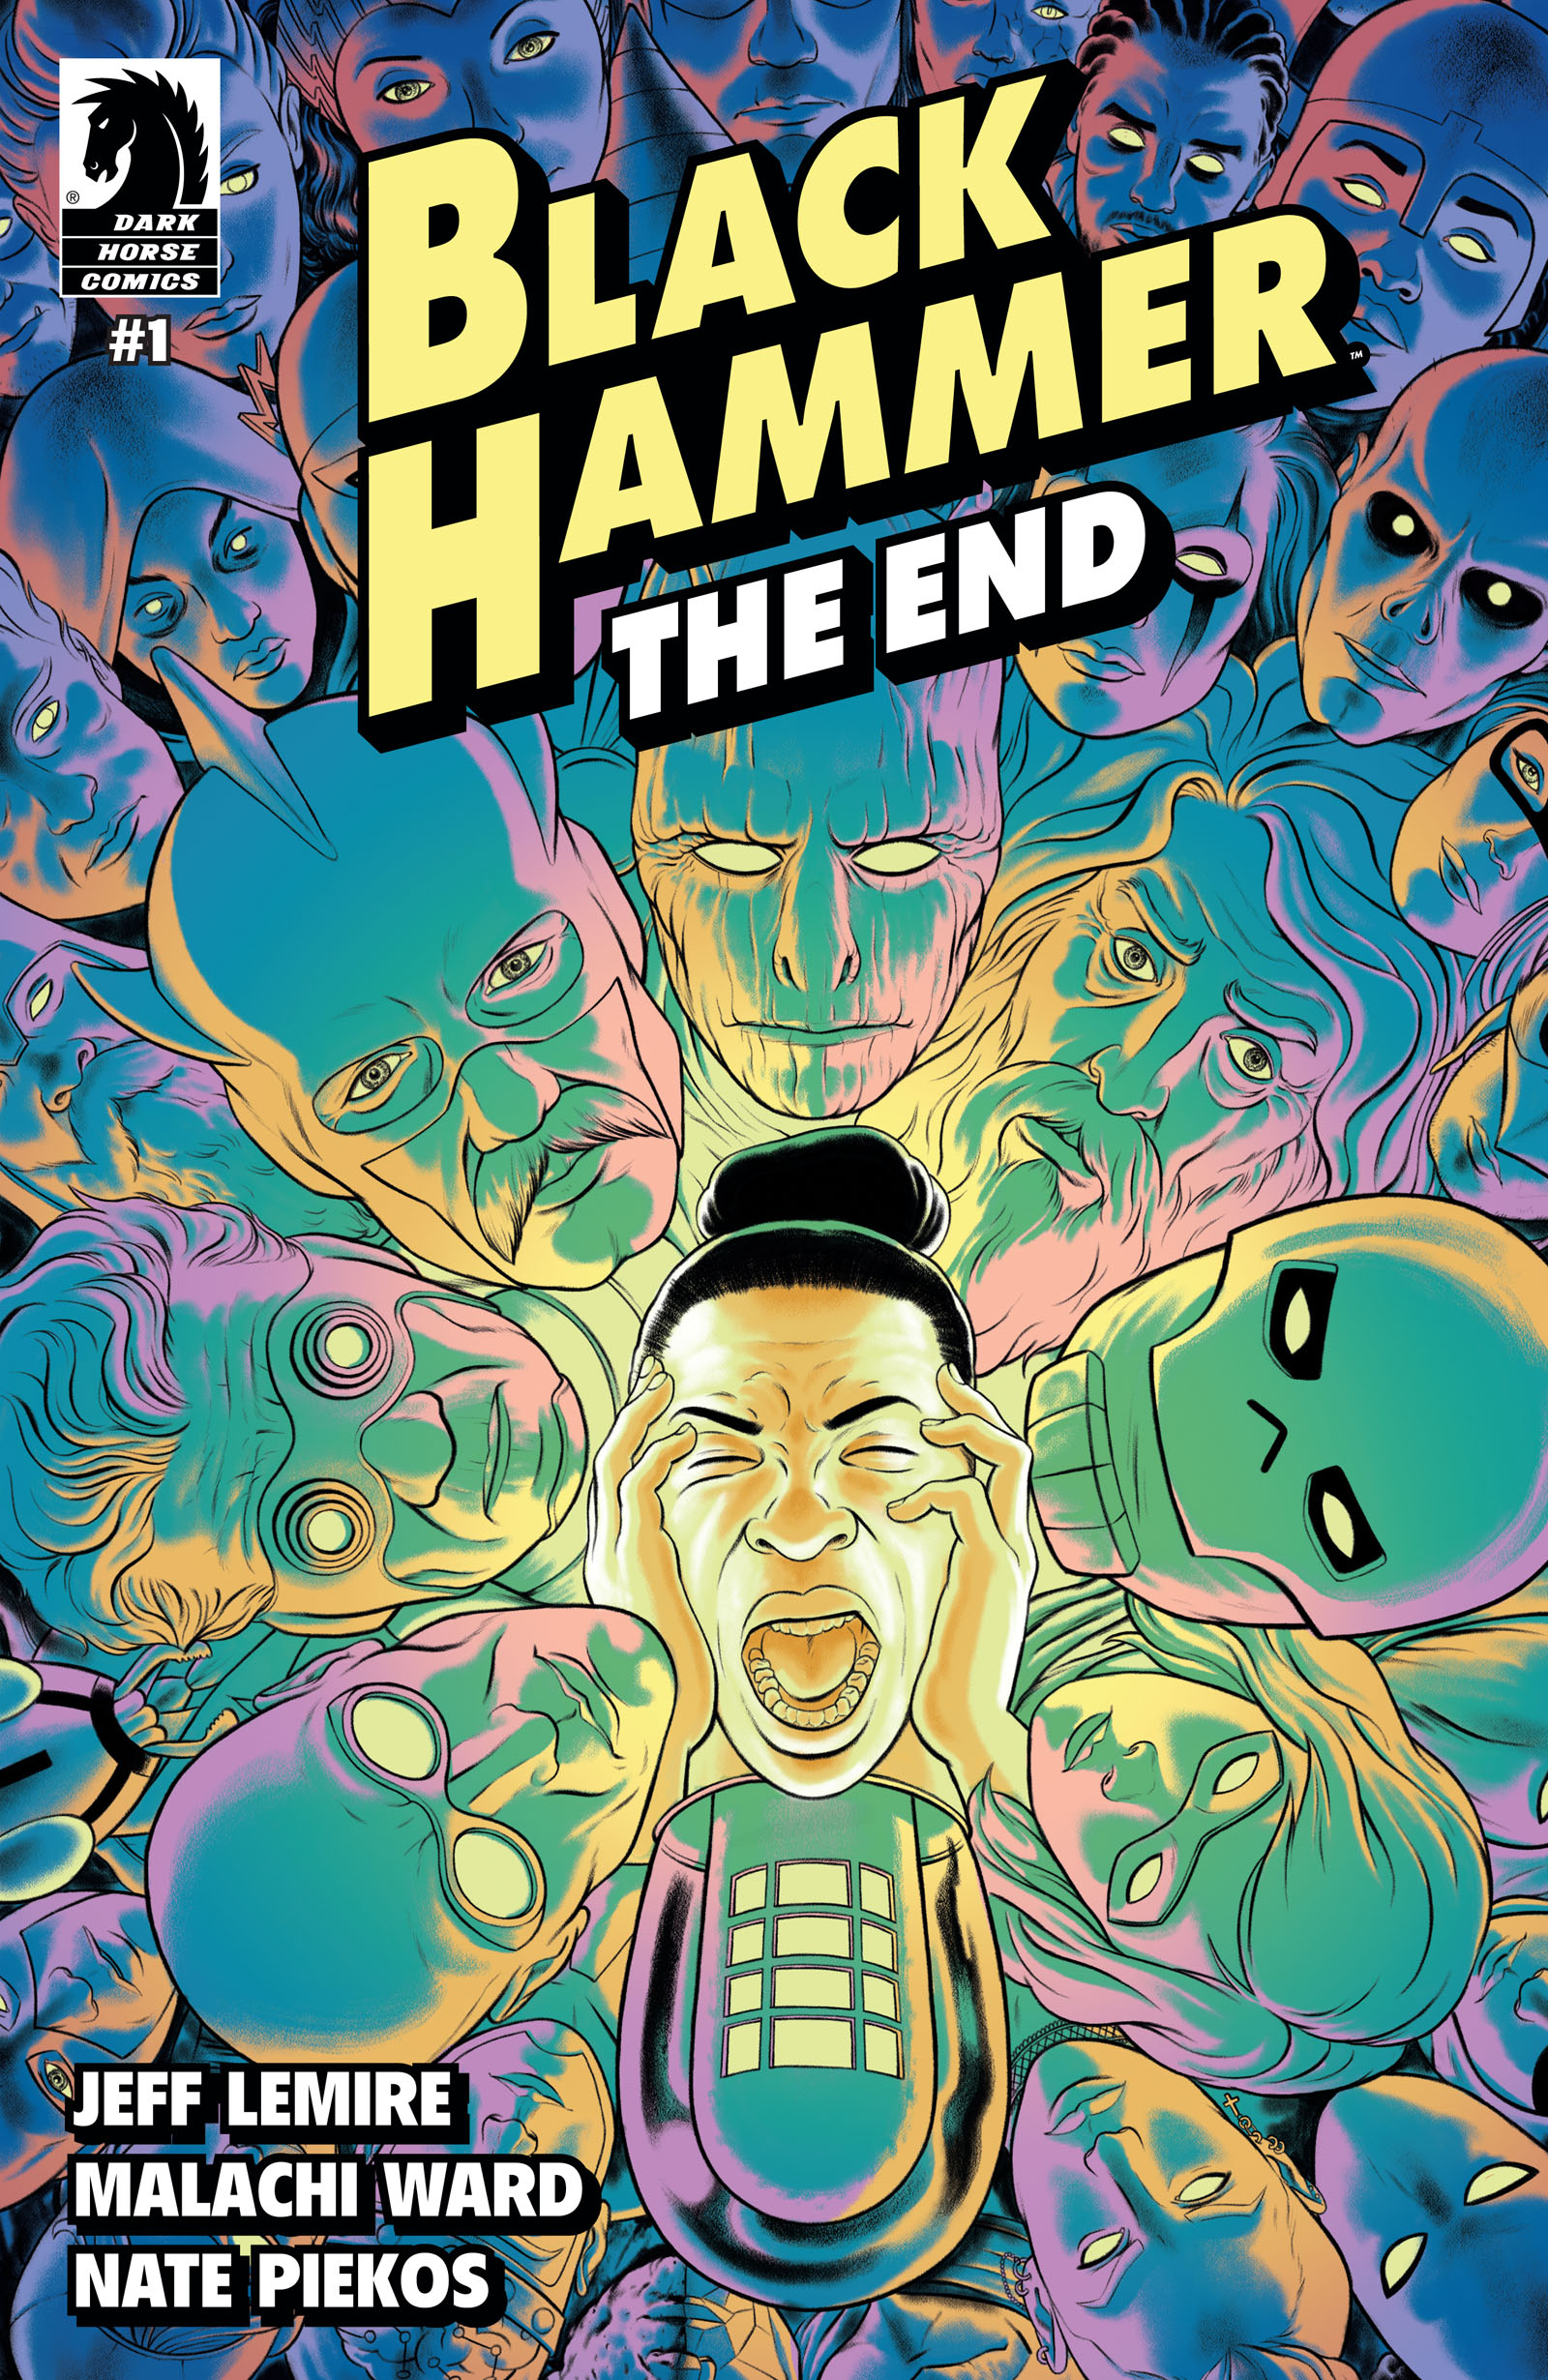 Black Hammer: The End #1 